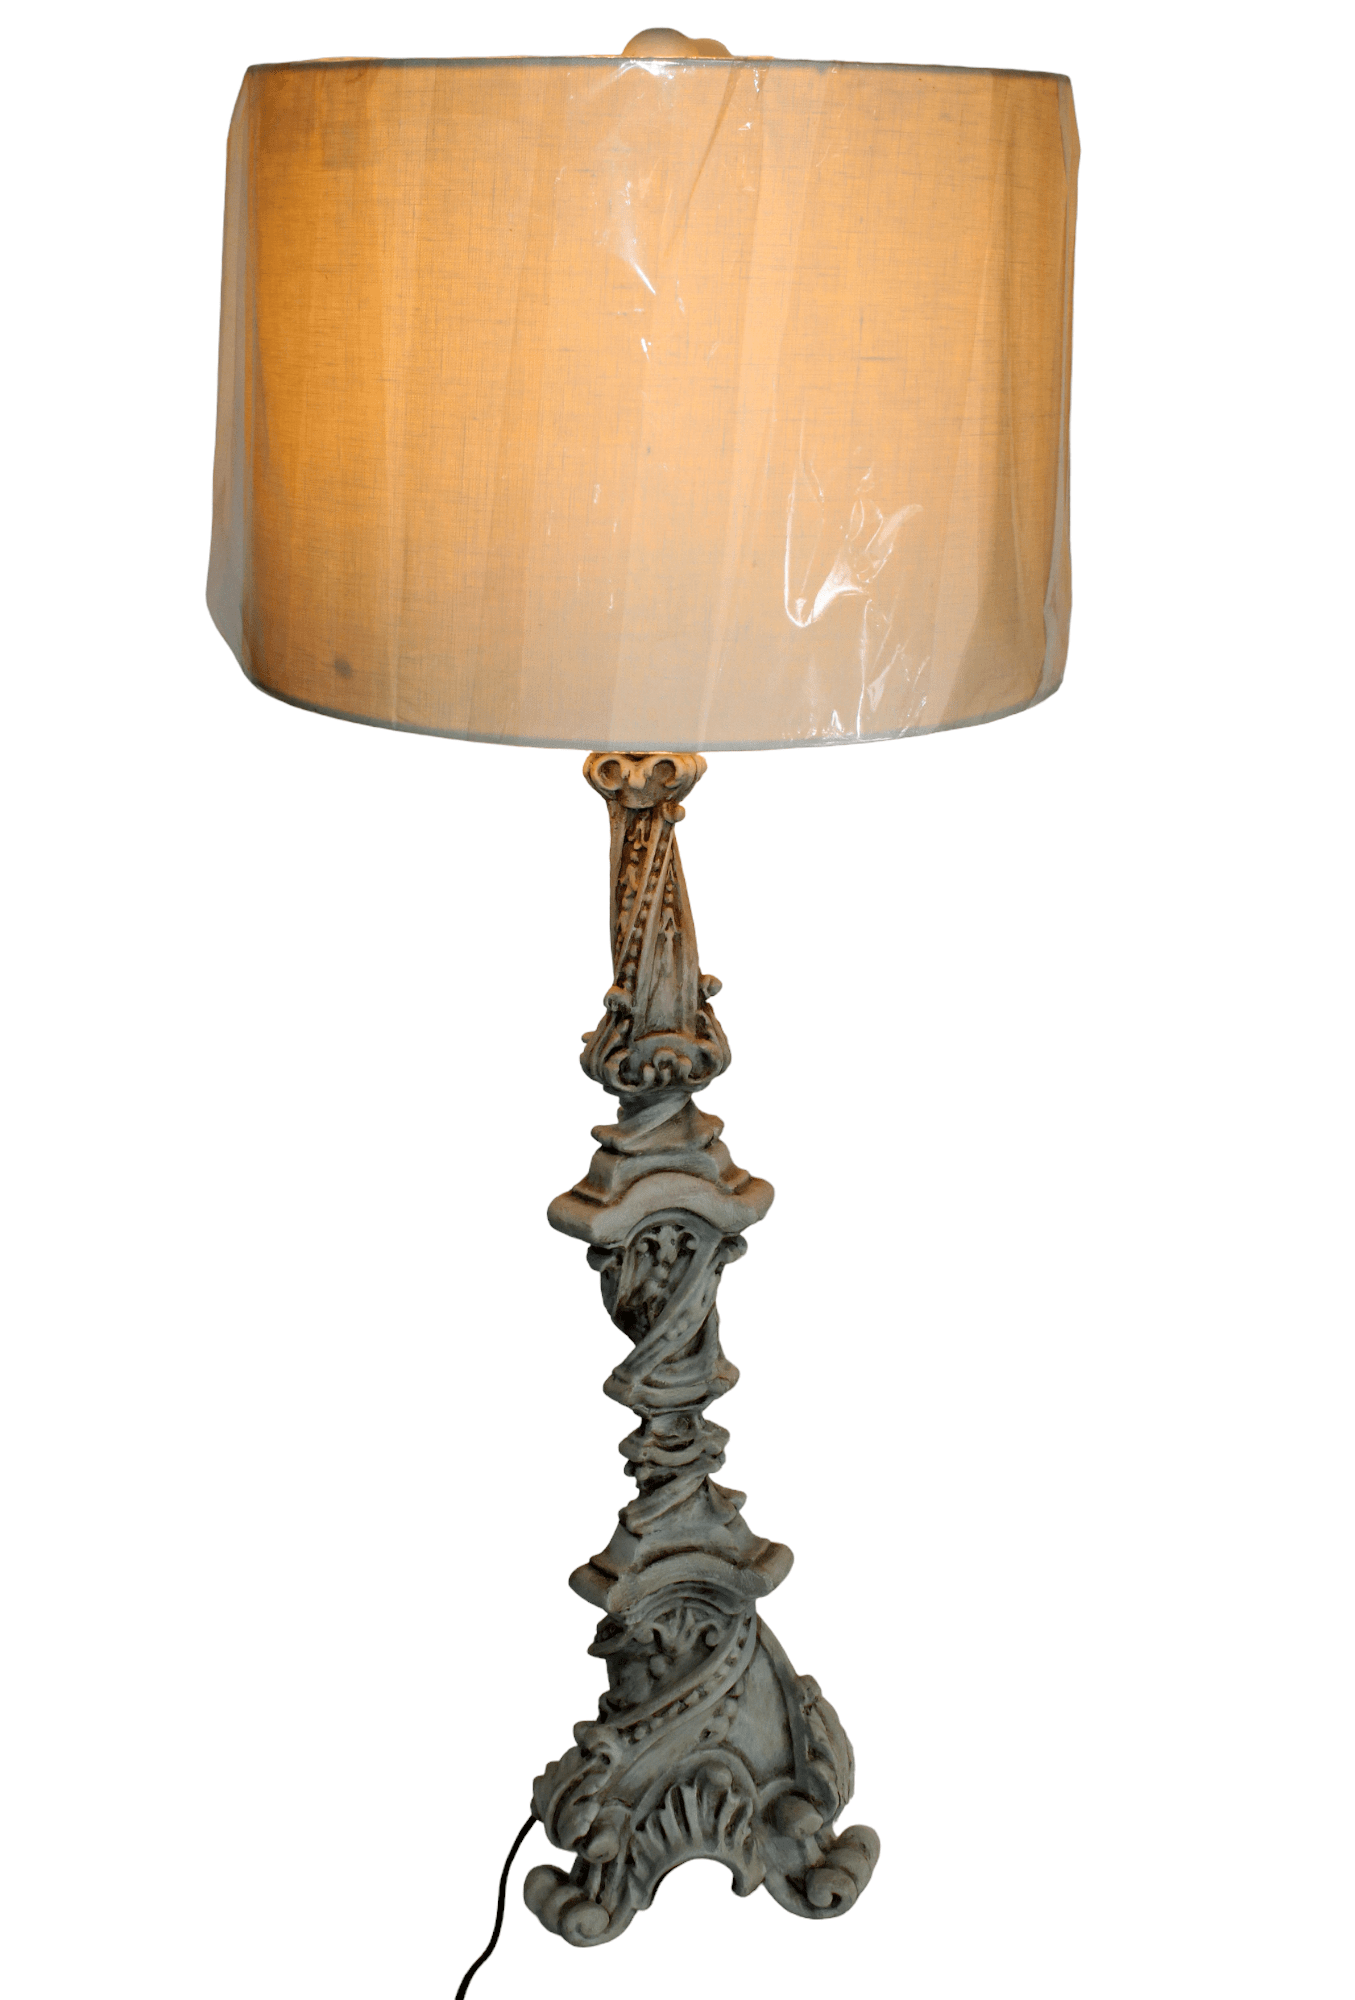 Italian painted wood candlestick lamp